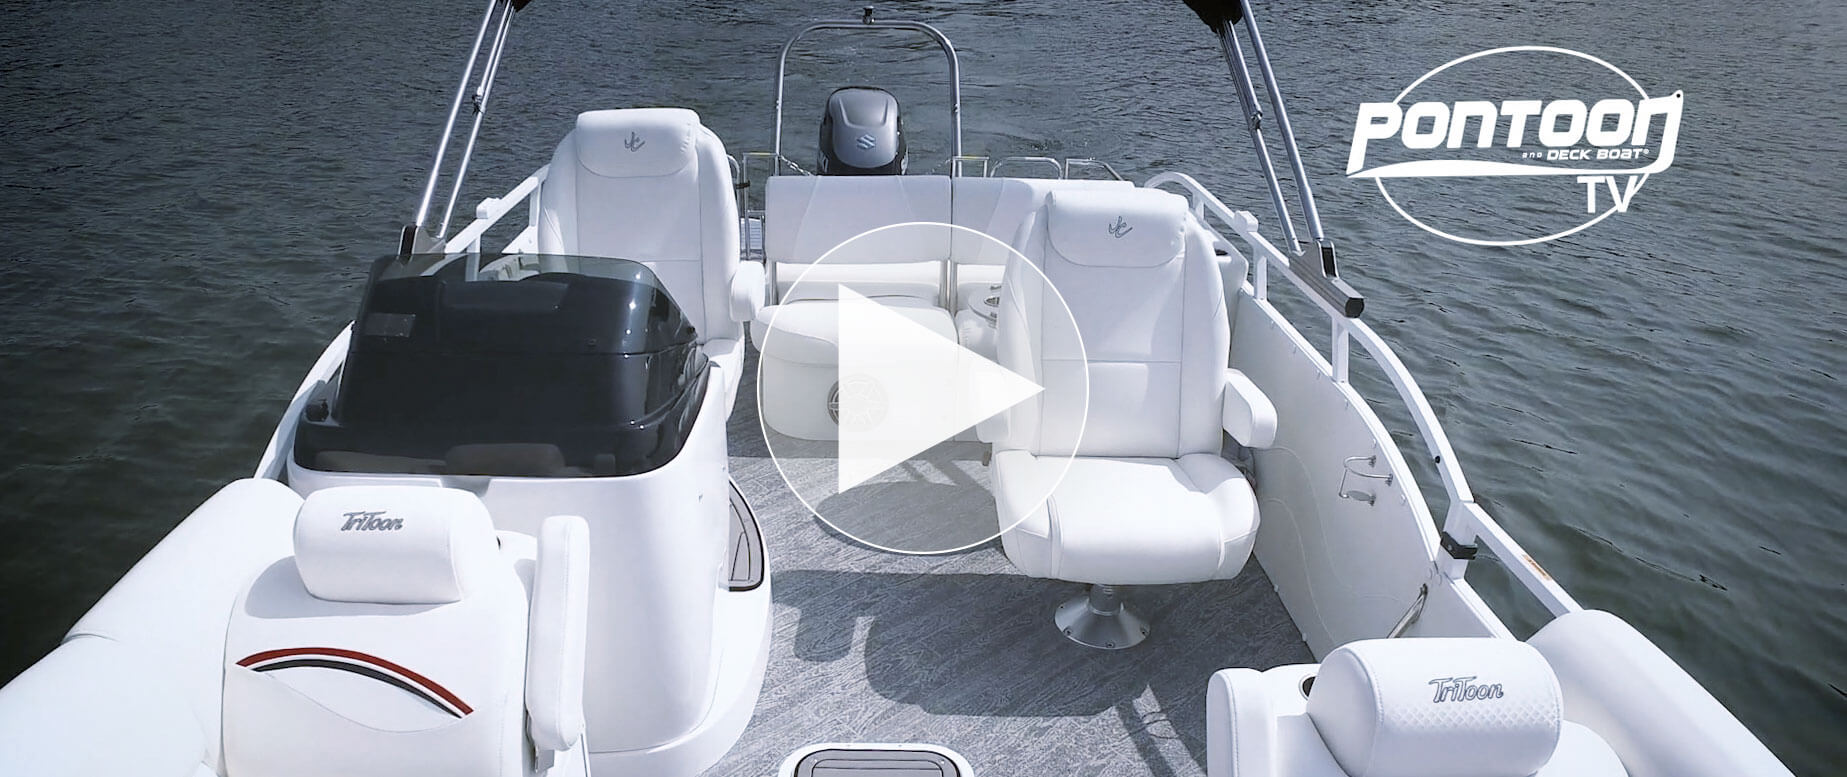 Pontoon & Deck Boat Magazine 2021 Shootout Video featuring the SportToon 26TT HTH Swing Back